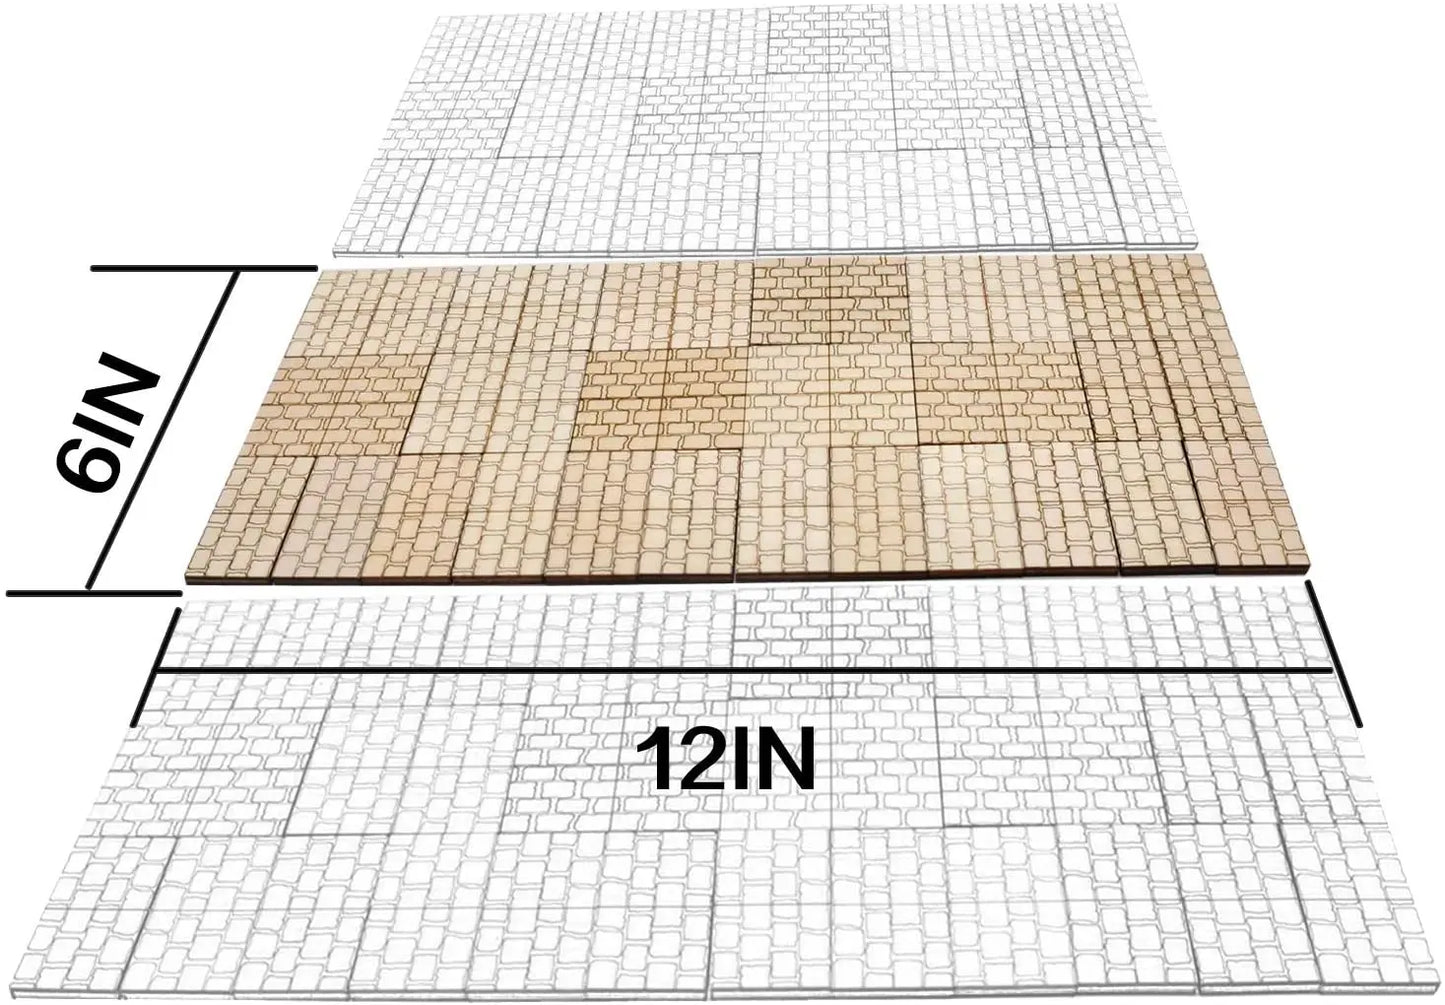 Dungeon Stone Square Floor Tiles (Set of 24) Wooden Laser Cut D&D Modular Terrain 1" Grid